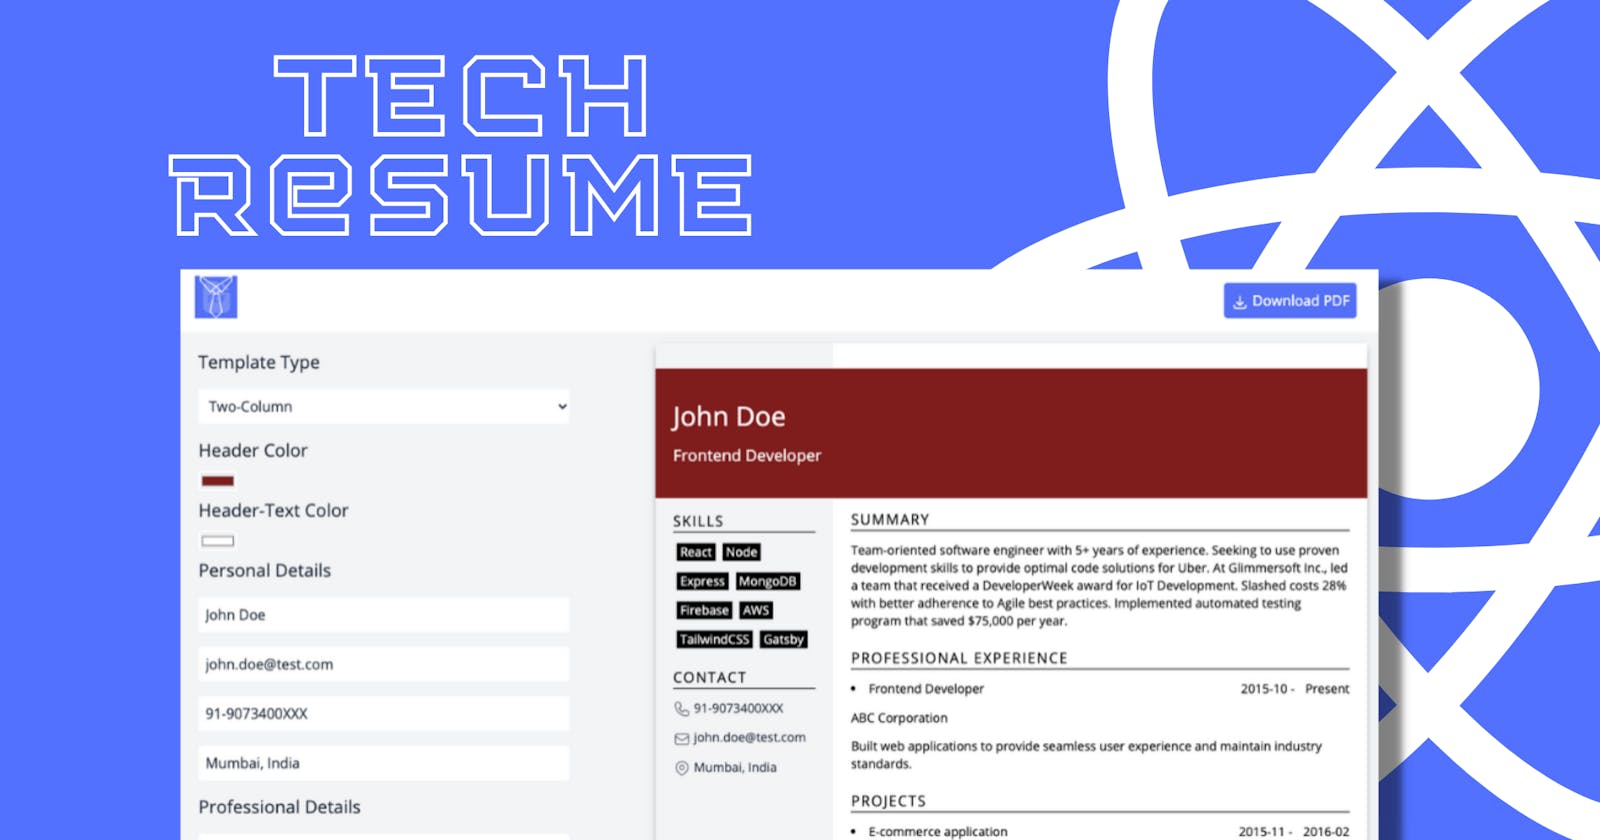 Tech Resume - effortlessly make a job-worthy resume